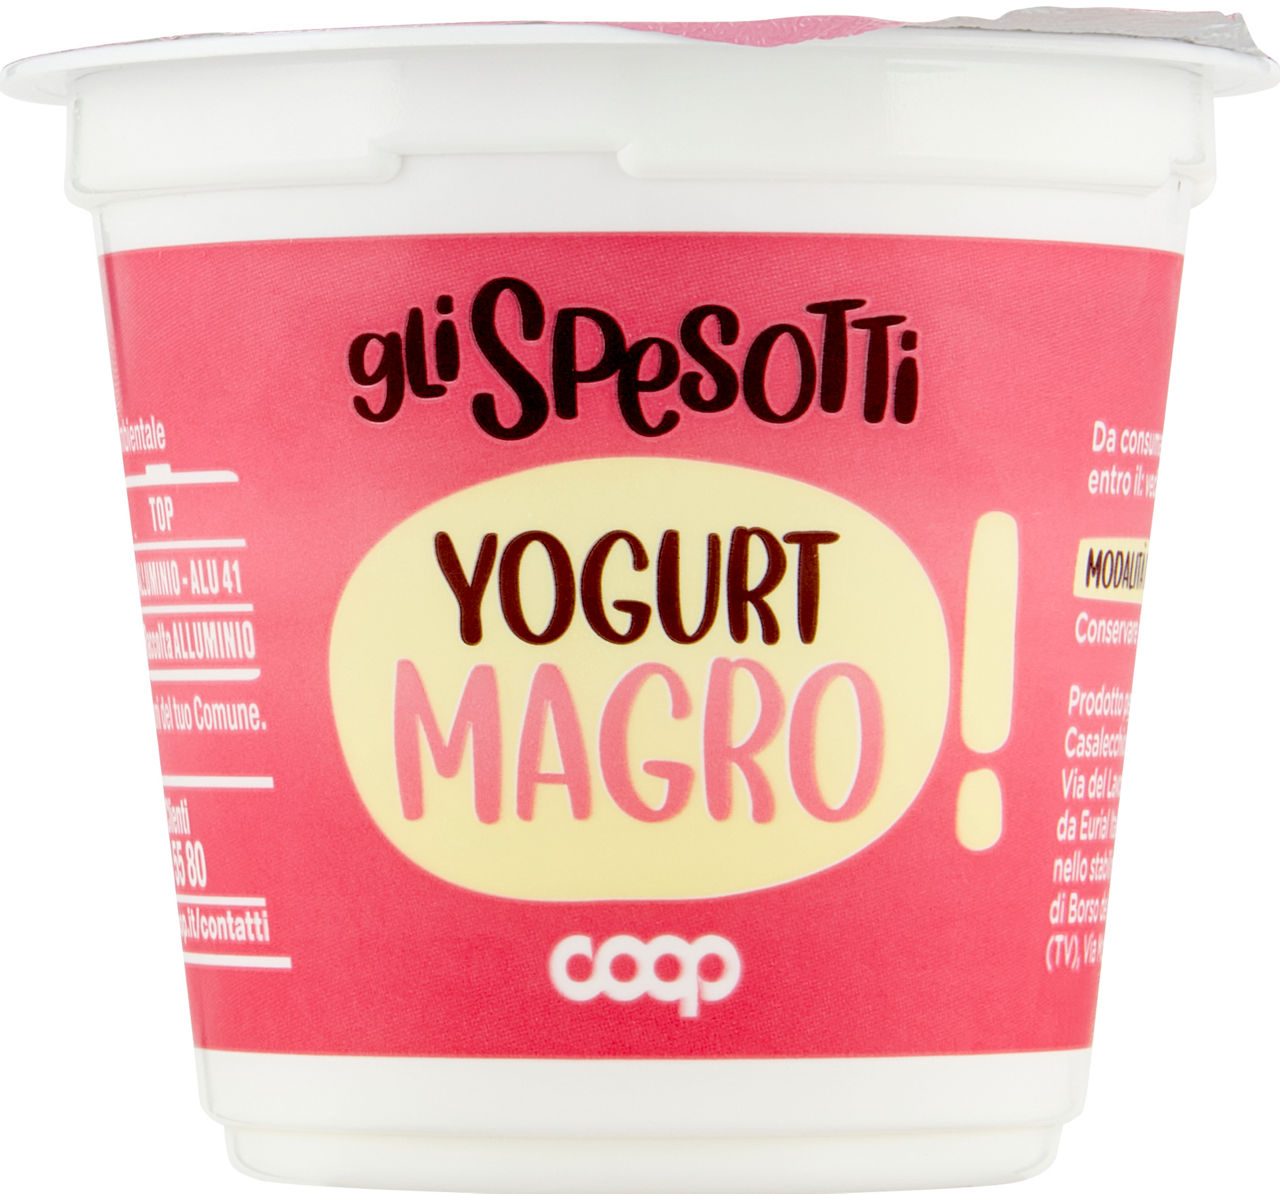 Yogurt magro bianco gli spesotti coop g 125